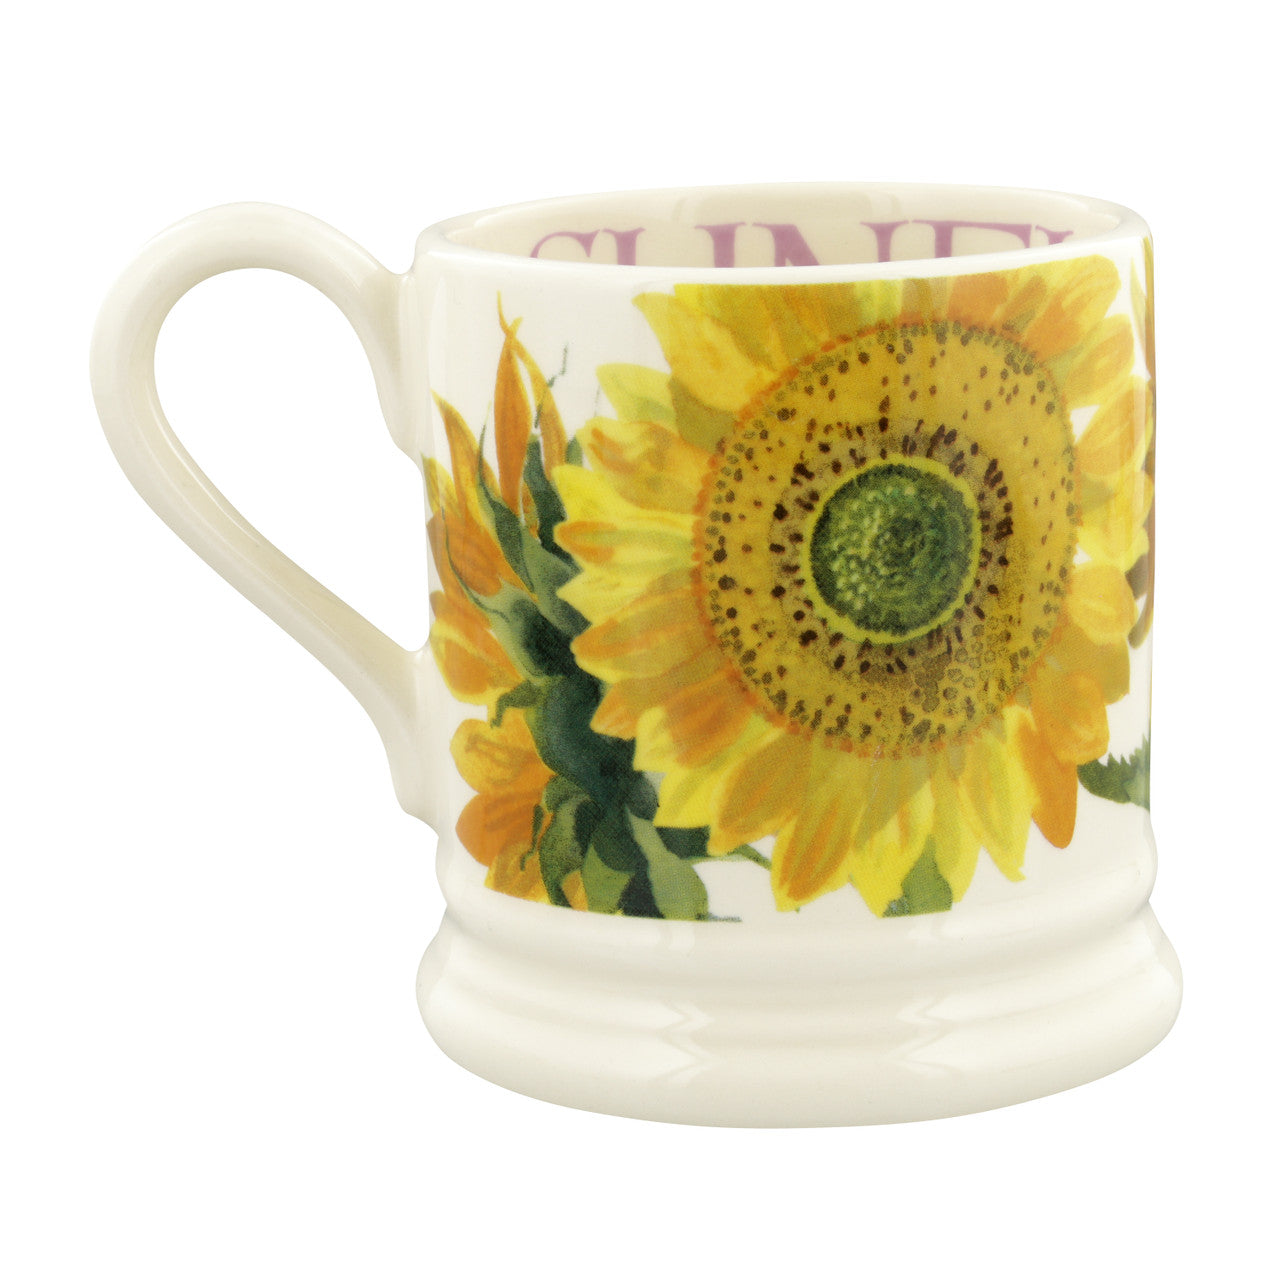 Handmade pottery sunflower half pint mug from Emma Bridgewater.